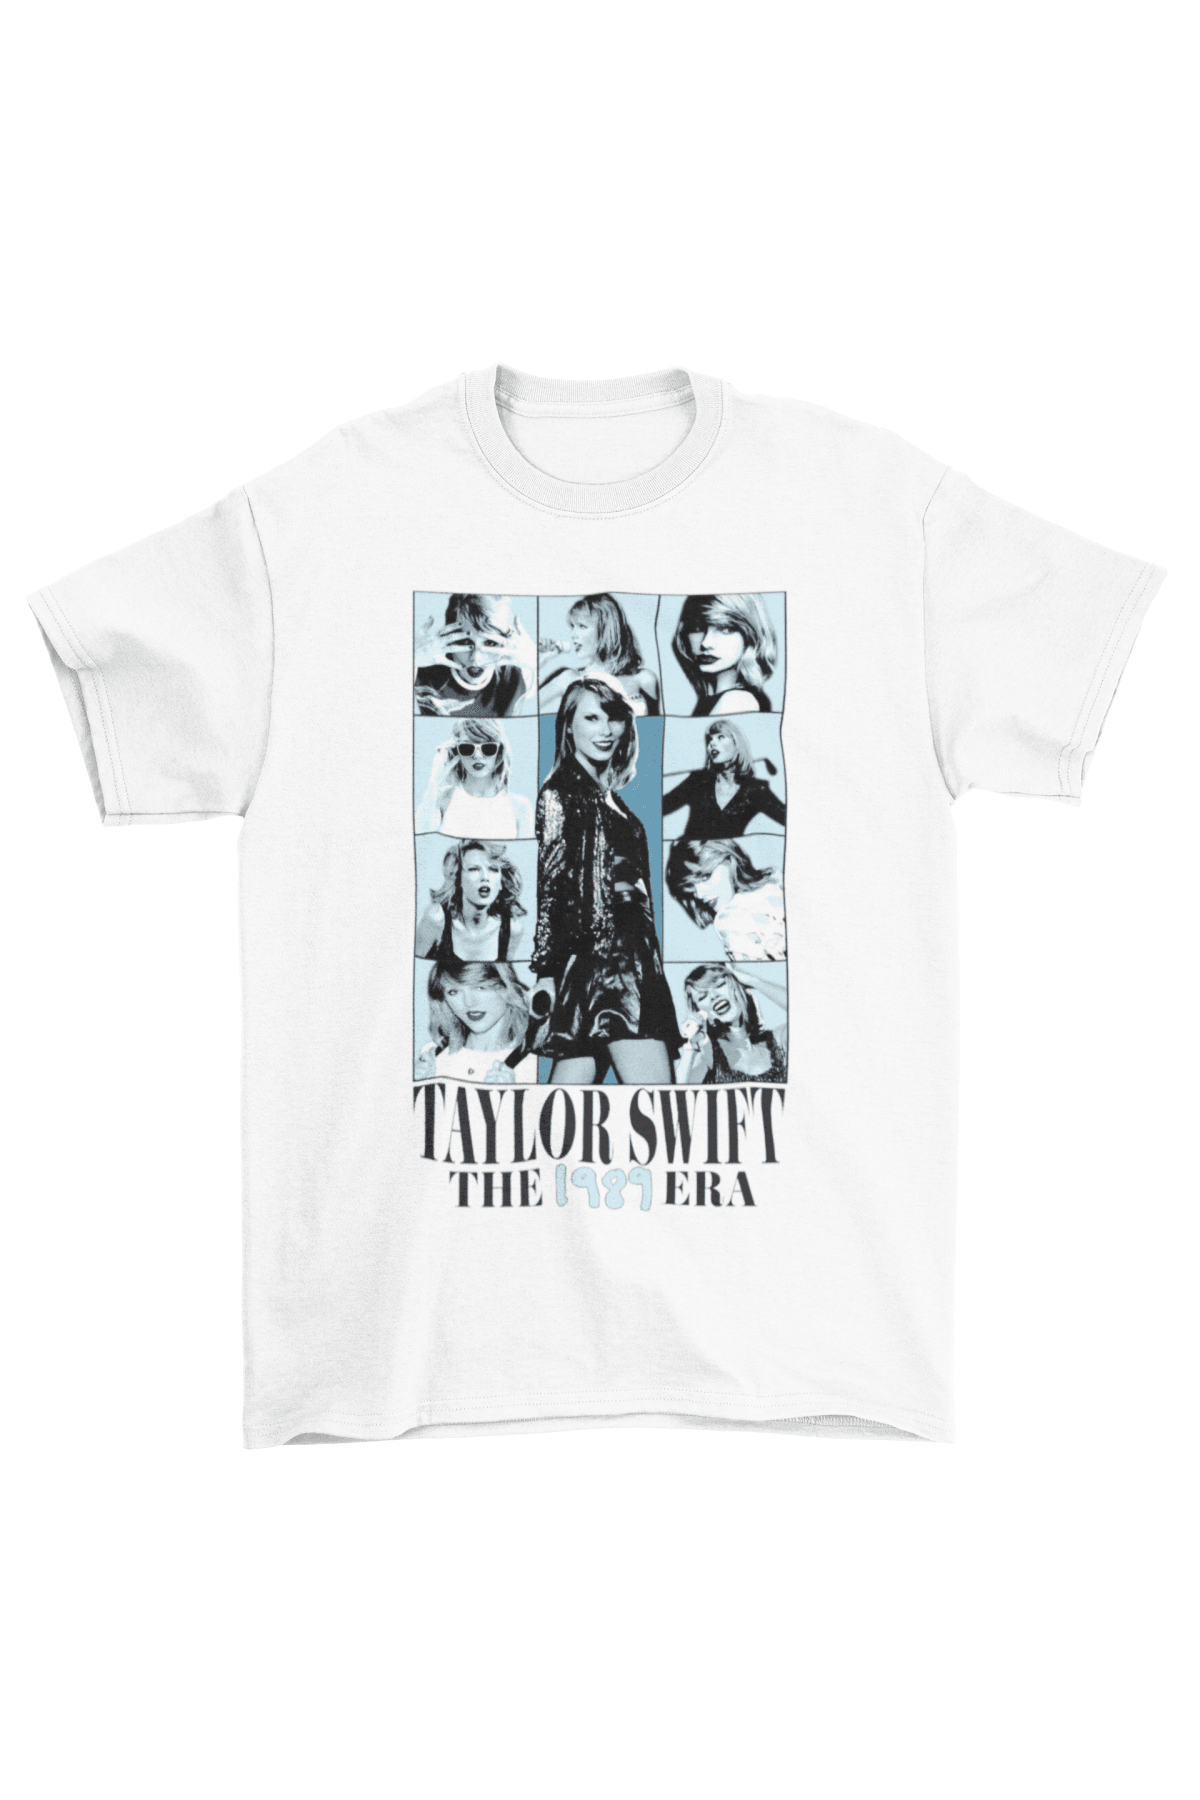 Taylor Swift The 1989 Era Beyaz Tshirt